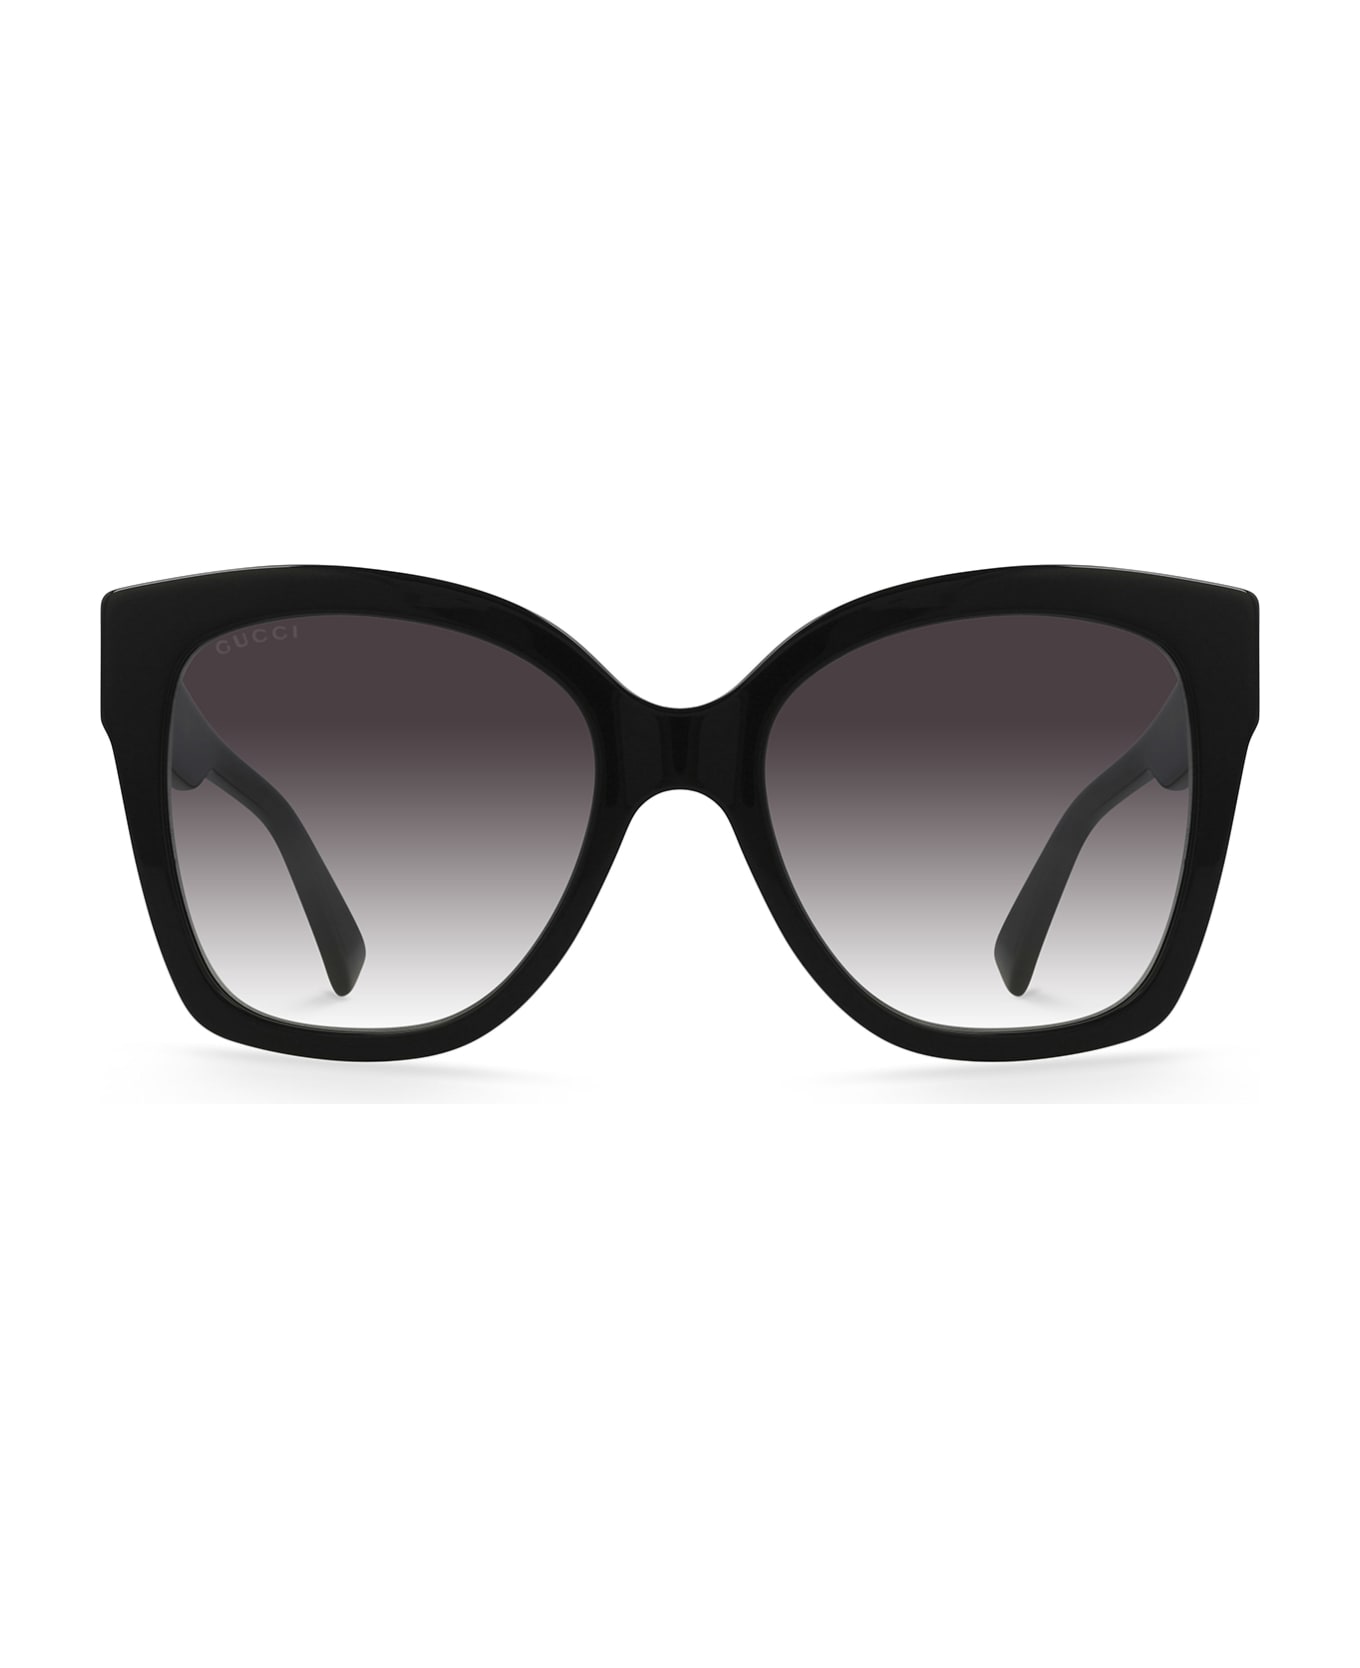 Gucci Eyewear Gg0459s Black Sunglasses - Black